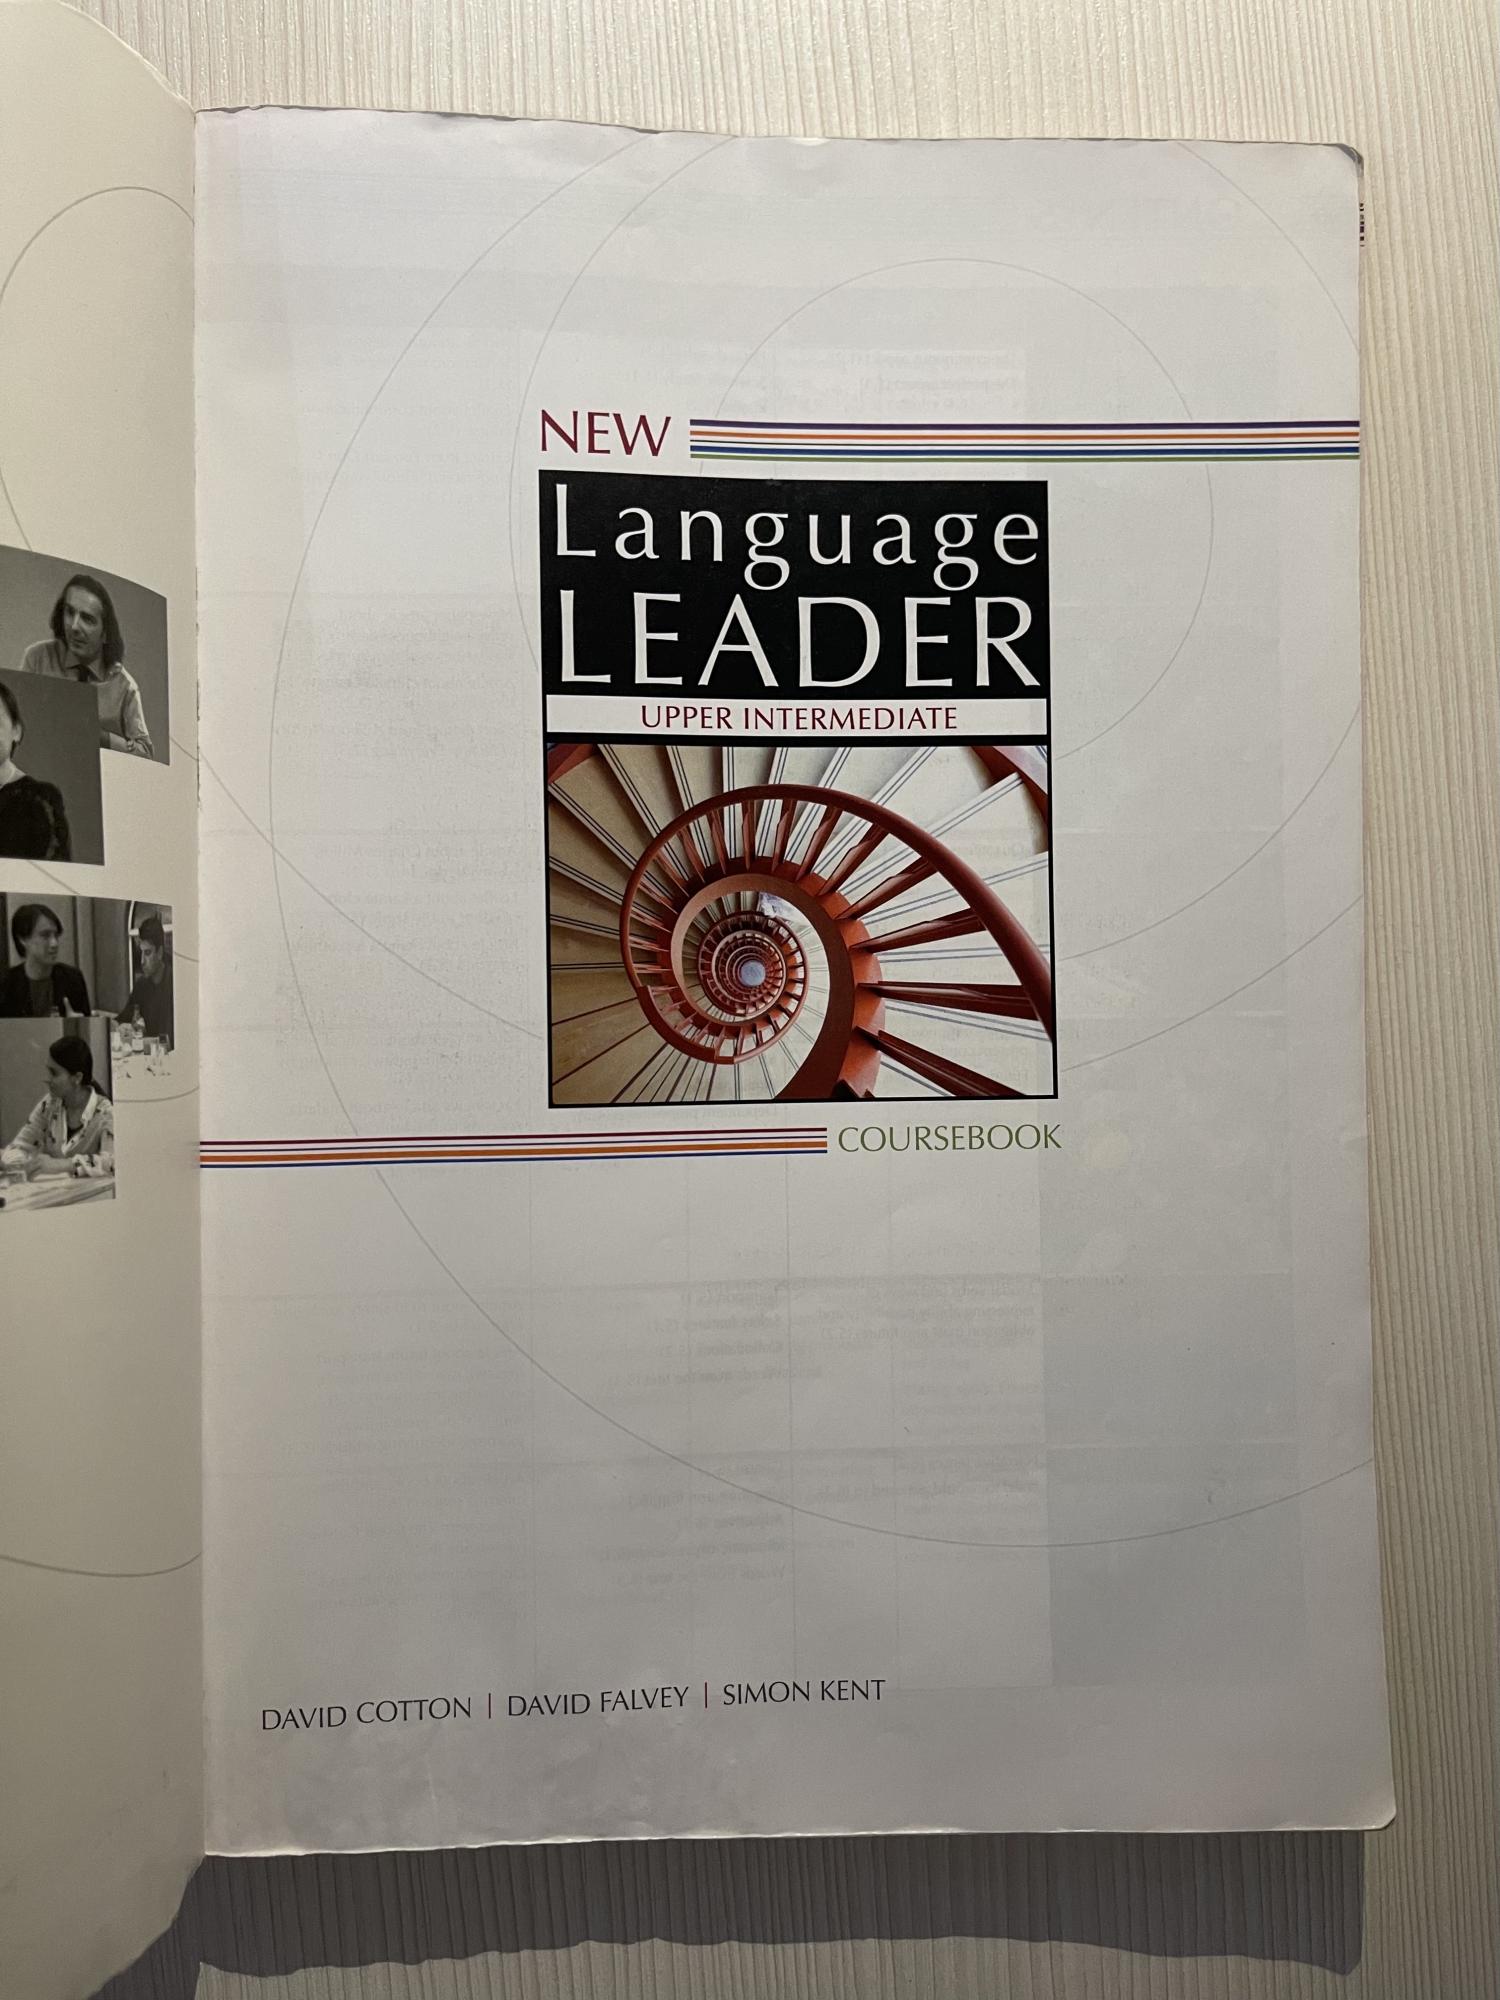 New leader upper intermediate. New language leader Upper Intermediate. Language leader Intermediate Coursebook. New language leader Intermediate.